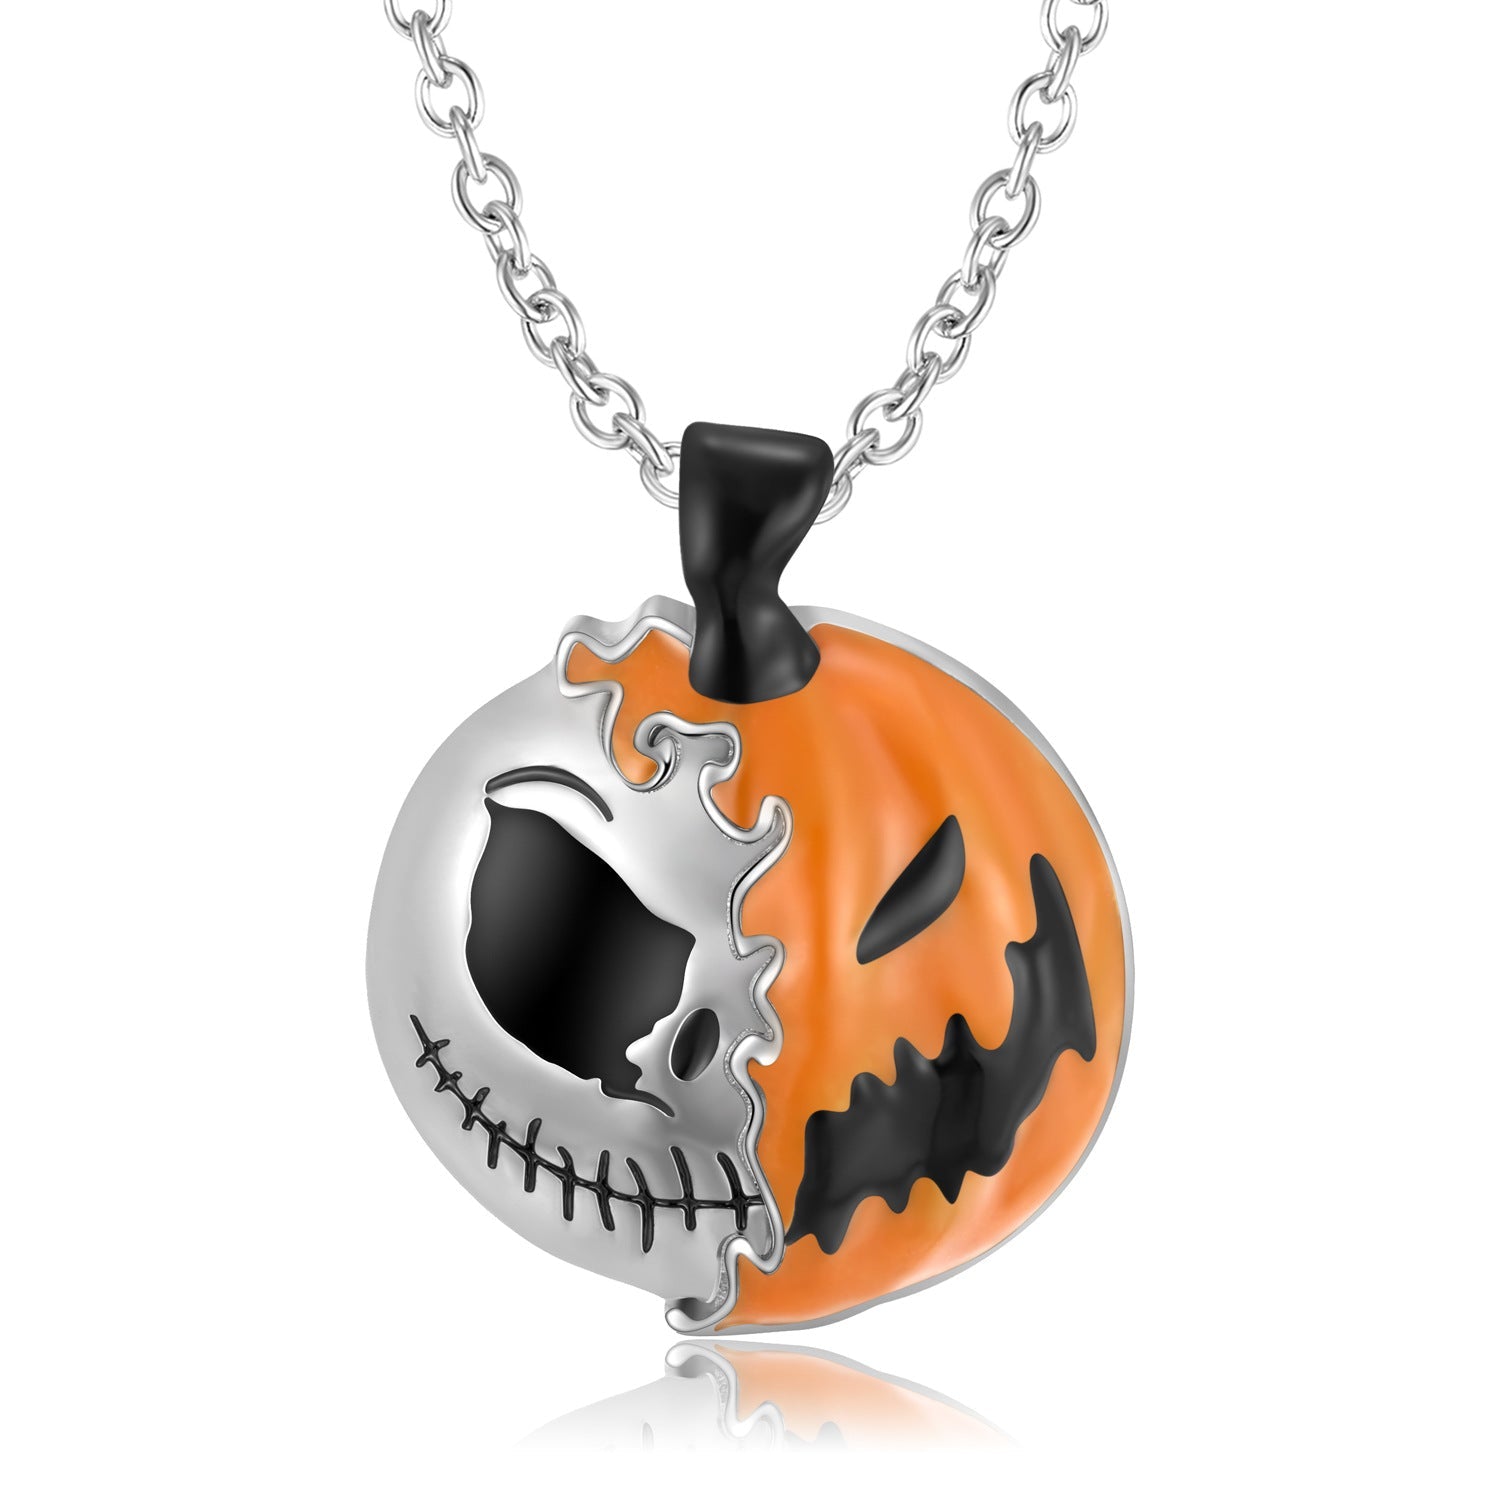 Boltiesd™ Double Sided Pumpkin Skull Necklace in Sterling Silver S925 for Halloween - Boltiesd™